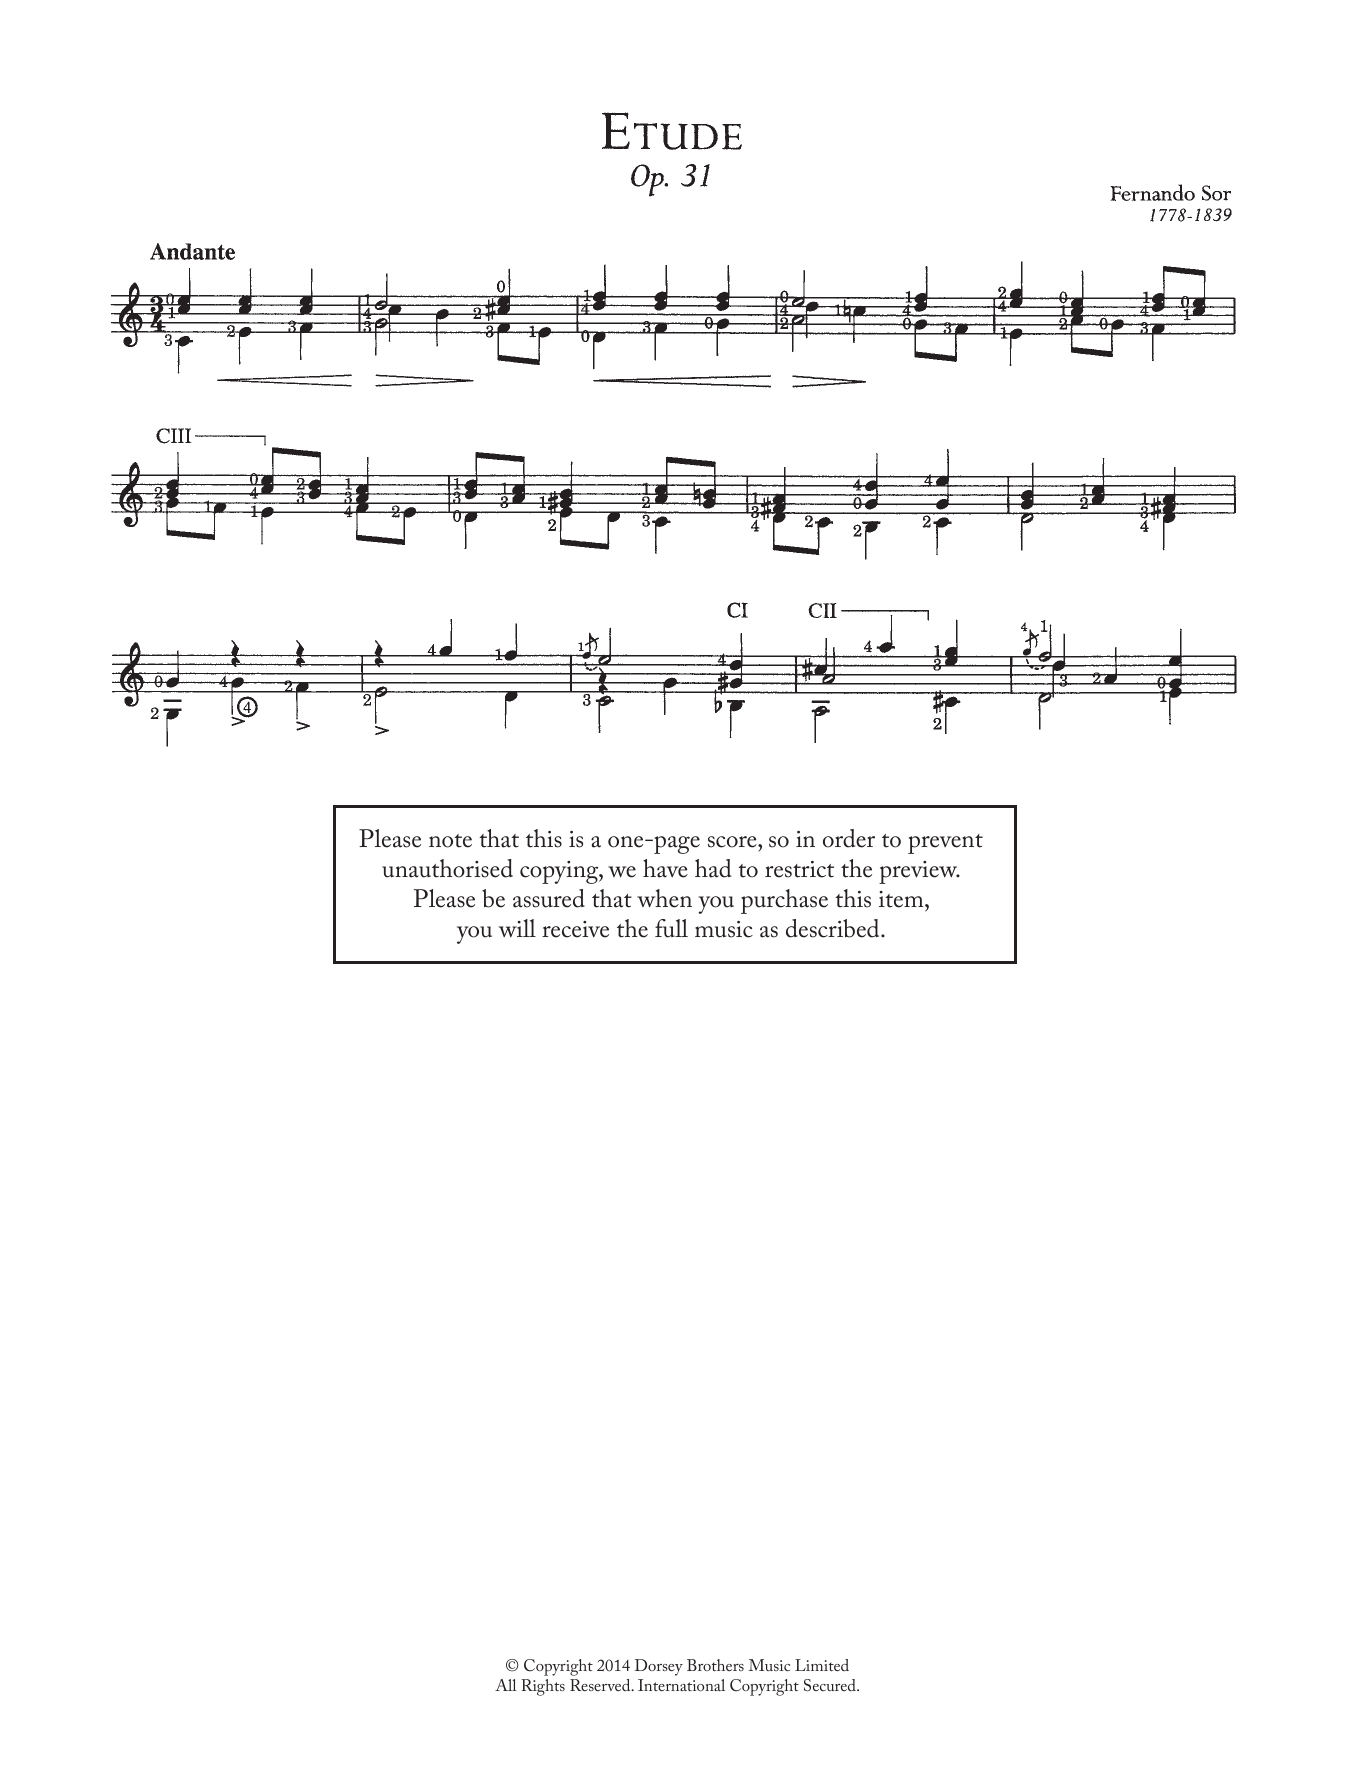 Fernando Sor Etude, Op.31 Sheet Music Notes & Chords for Guitar - Download or Print PDF